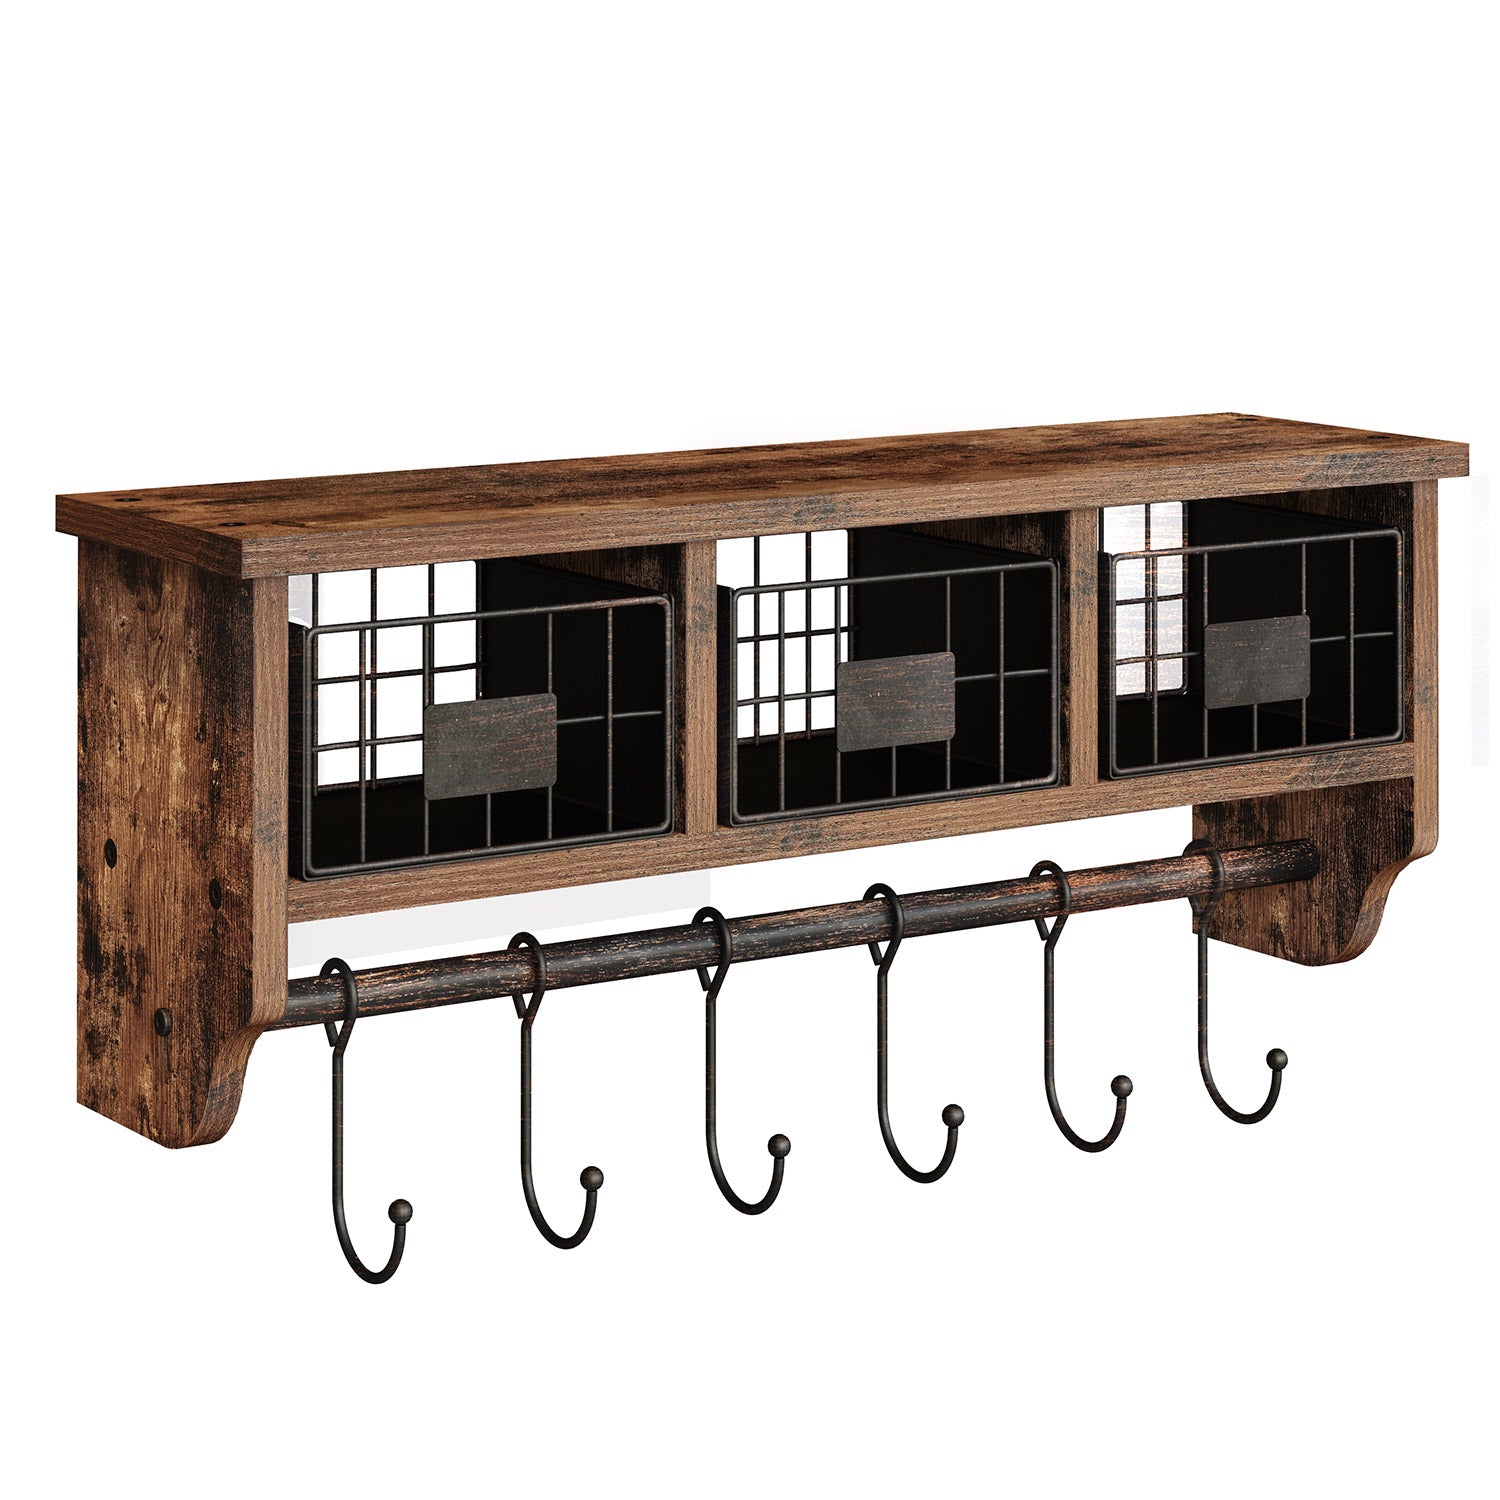 Rolanstar Spice Rack Organizer, 3 Tier Storage Shelf with Wire Basket